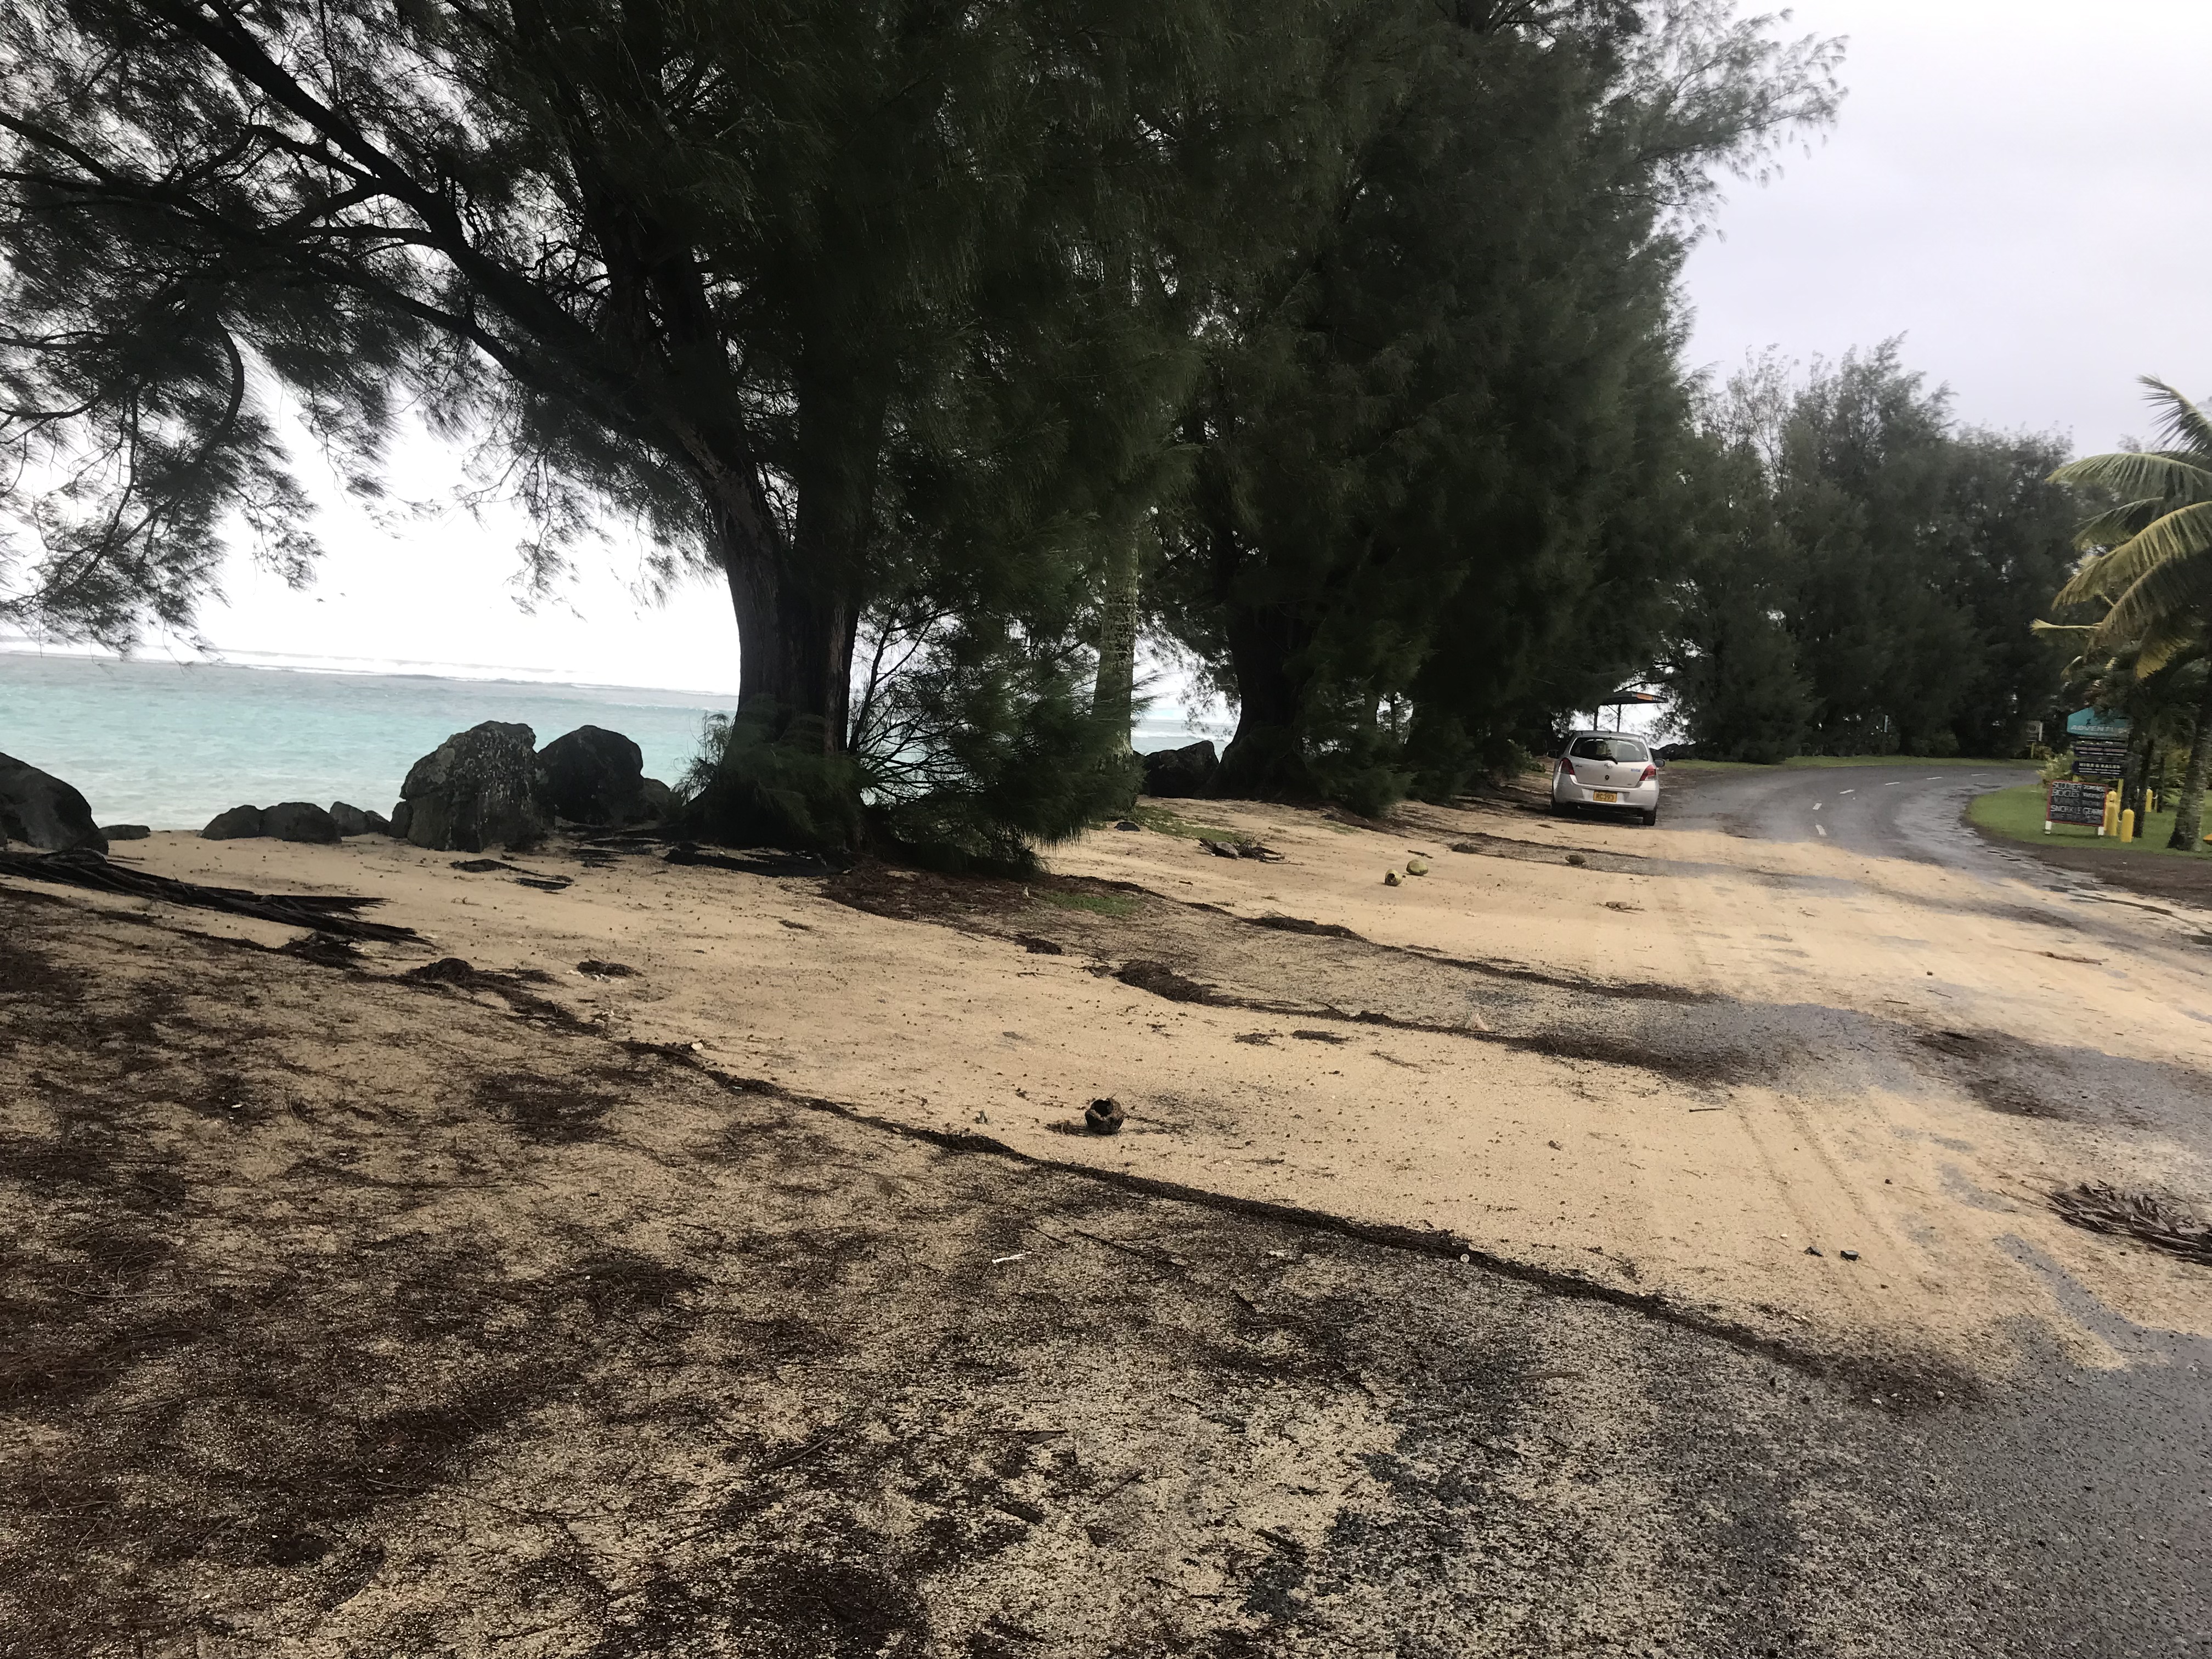 Resort experiences coastal inundation and beach erosion